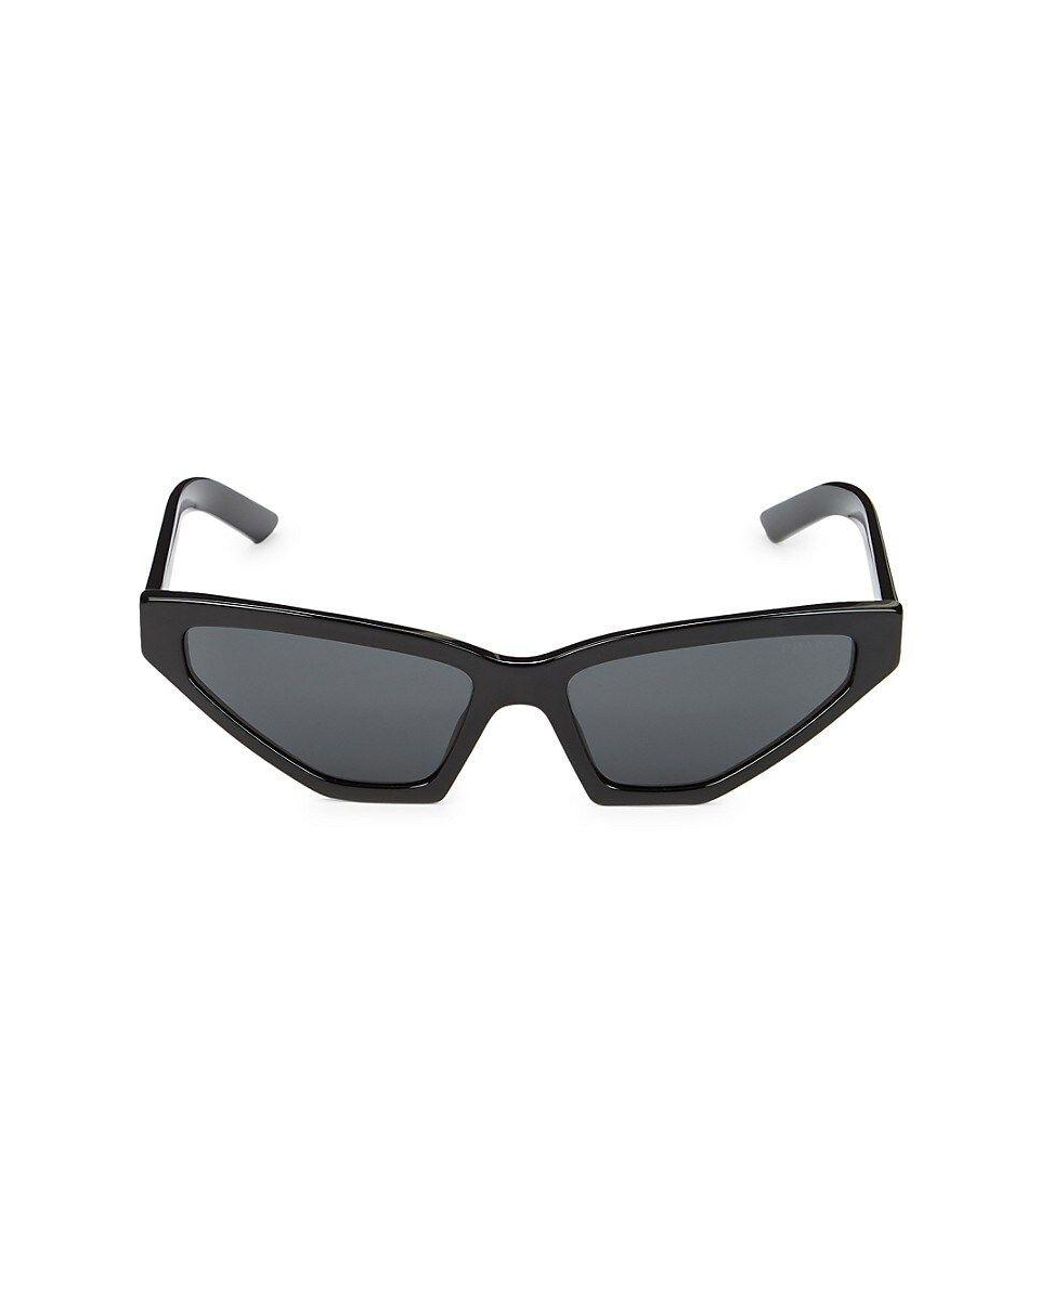 Prada Faux Tortoiseshell 57mm Cat Eye Sunglasses in Black | Lyst